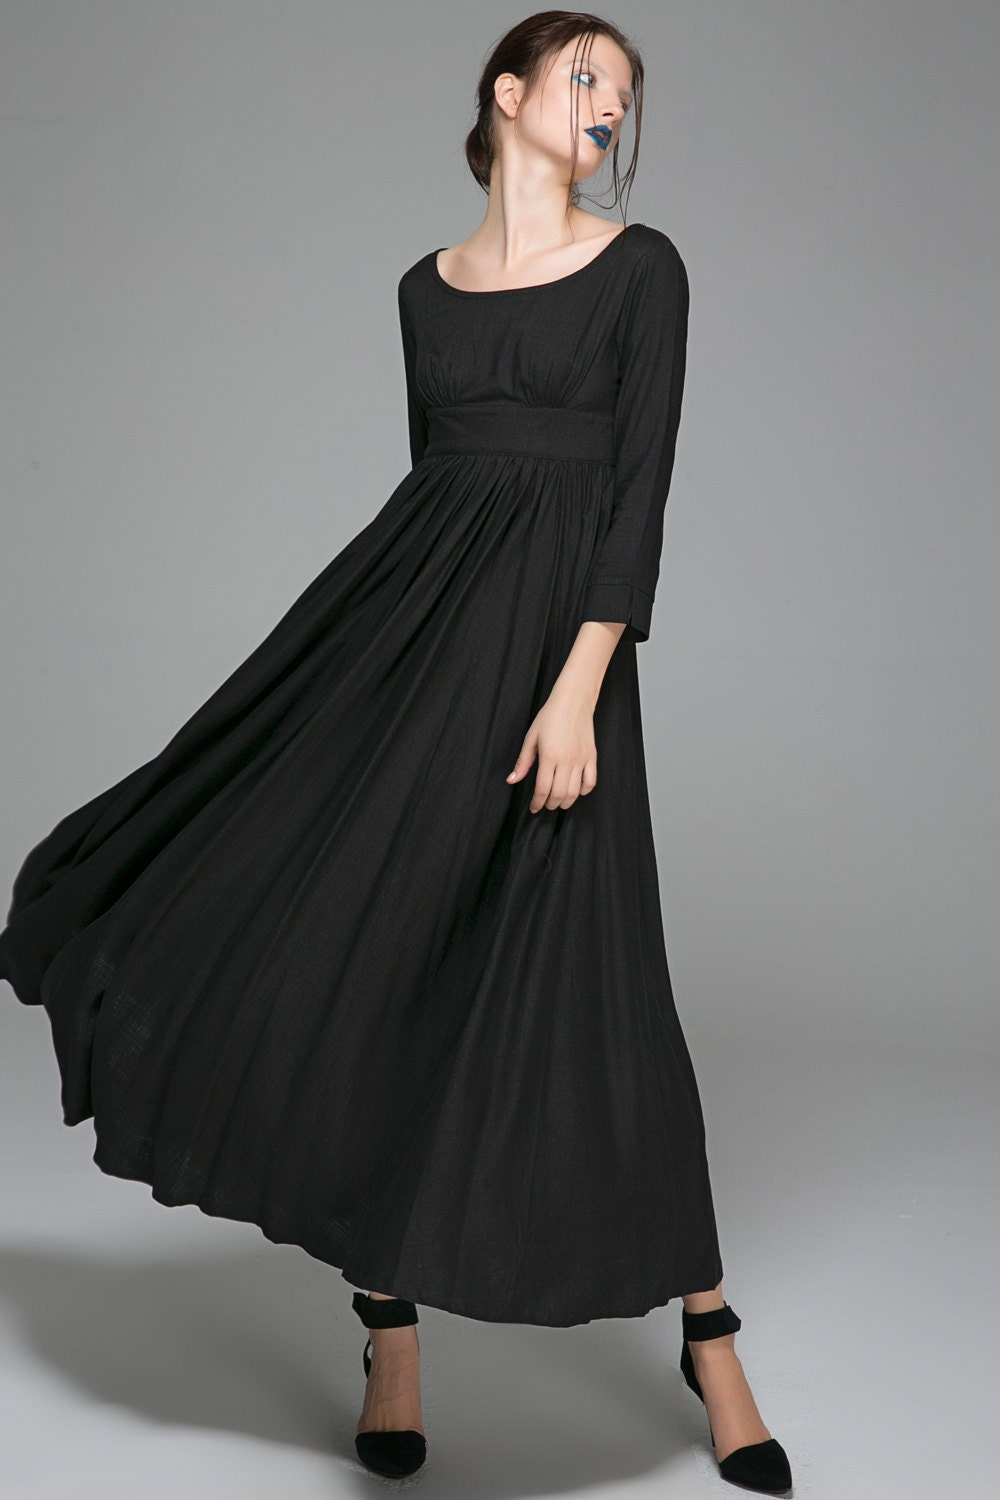 Linen dresses for womenBlack dress Maxi dressLinen Dress